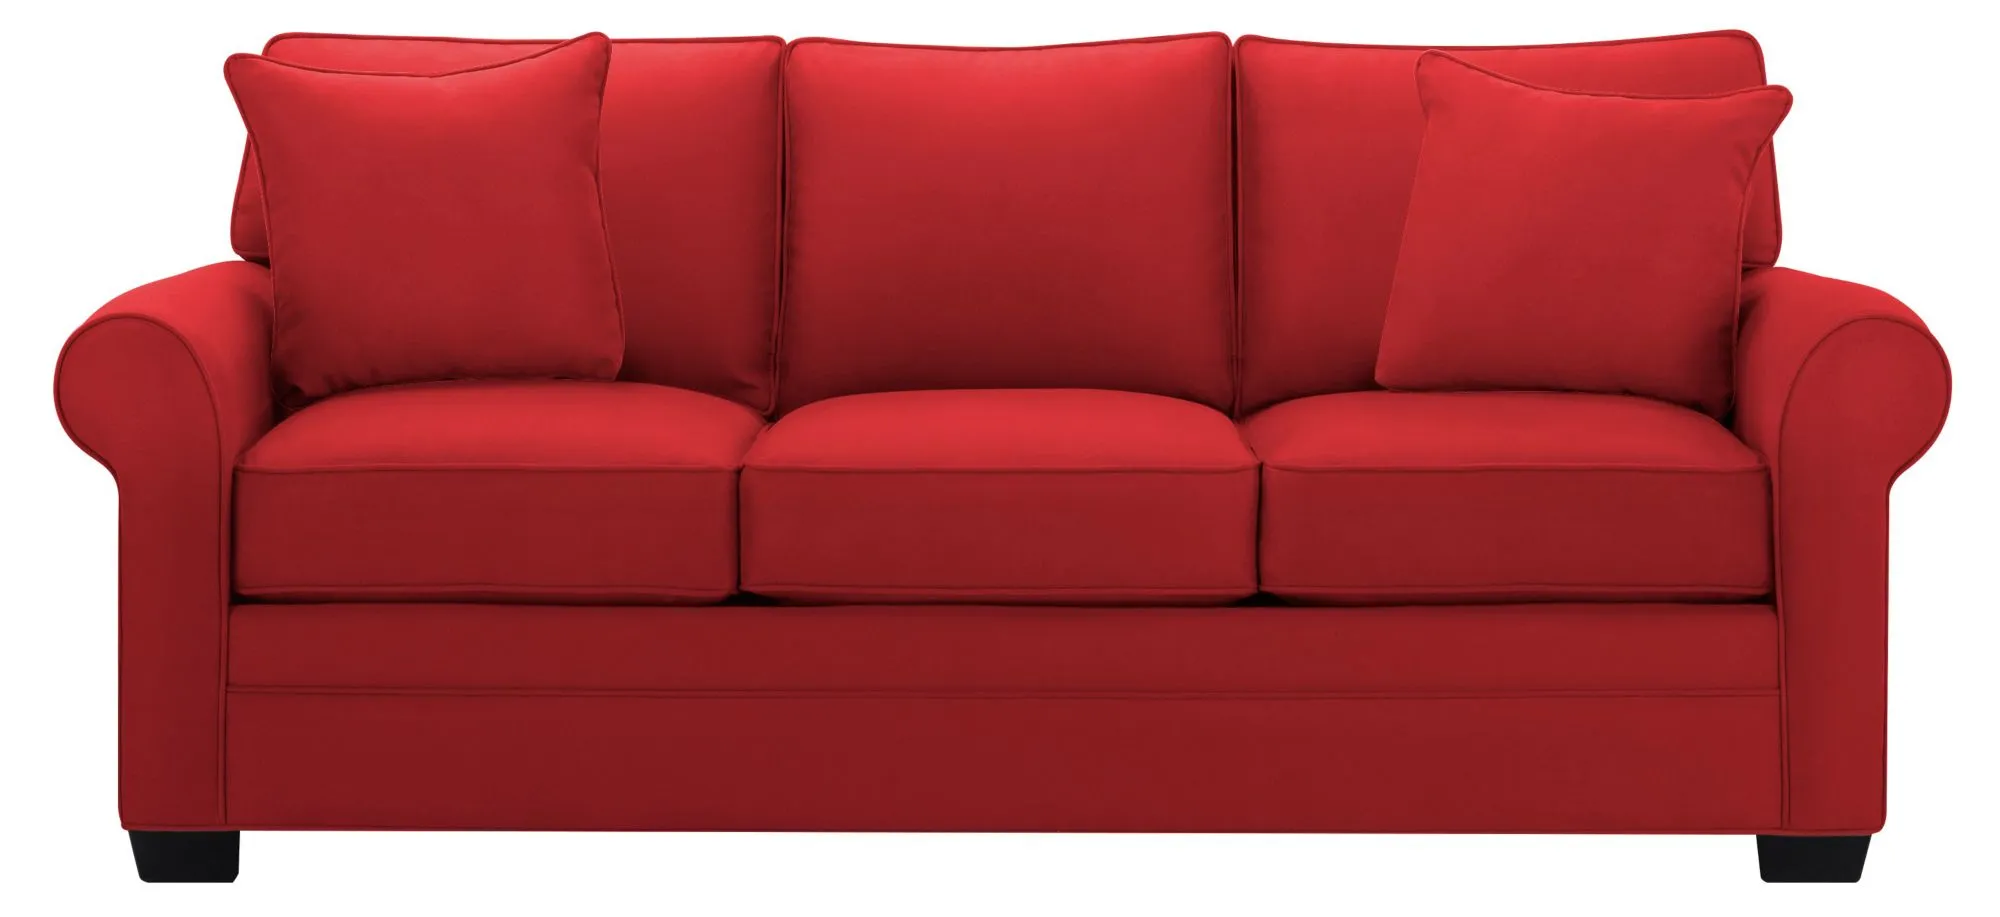 Glendora Queen Sleeper Sofa in Suede So Soft Cardinal by H.M. Richards